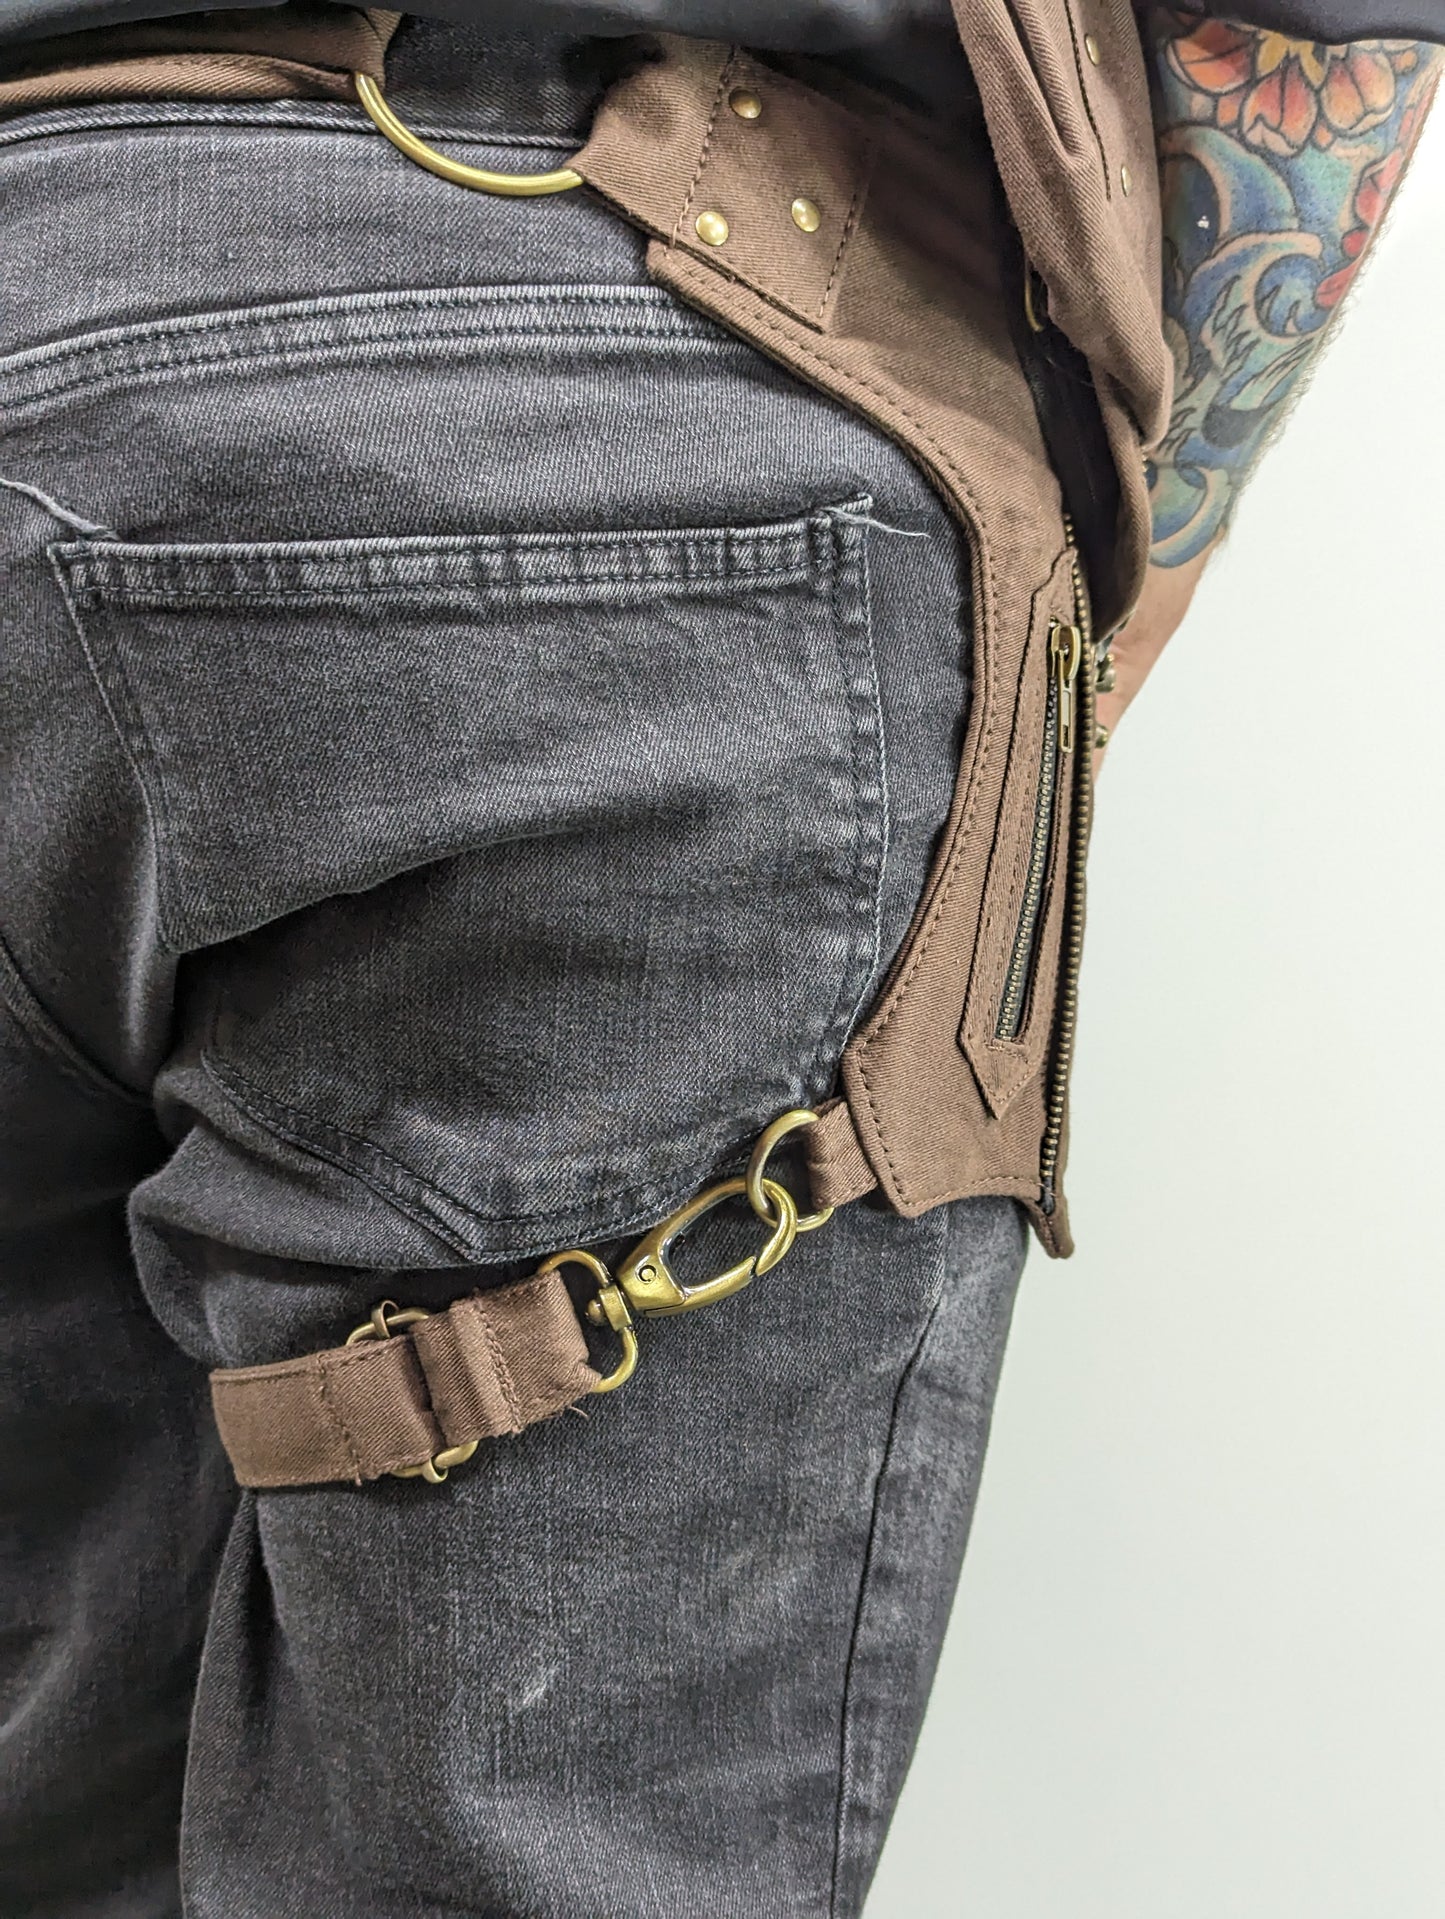 Bliss Pockets - hip holster